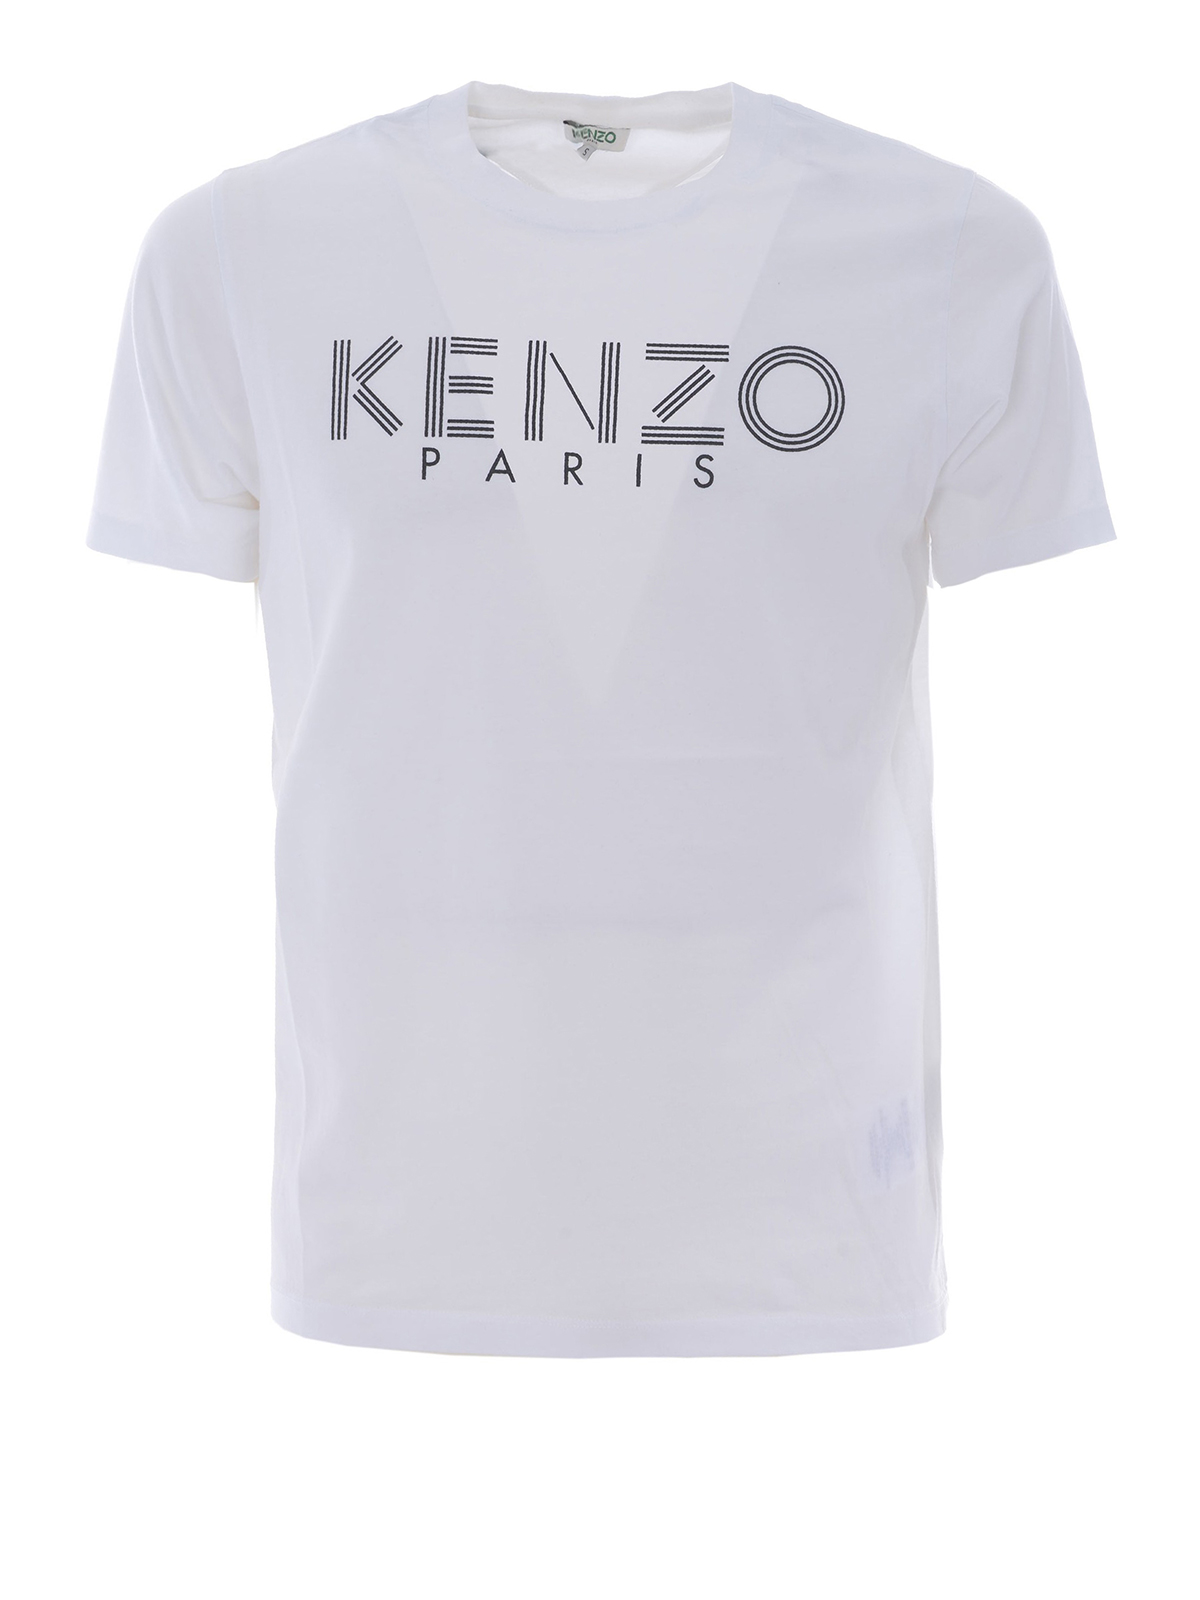 kenzo paris white t shirt